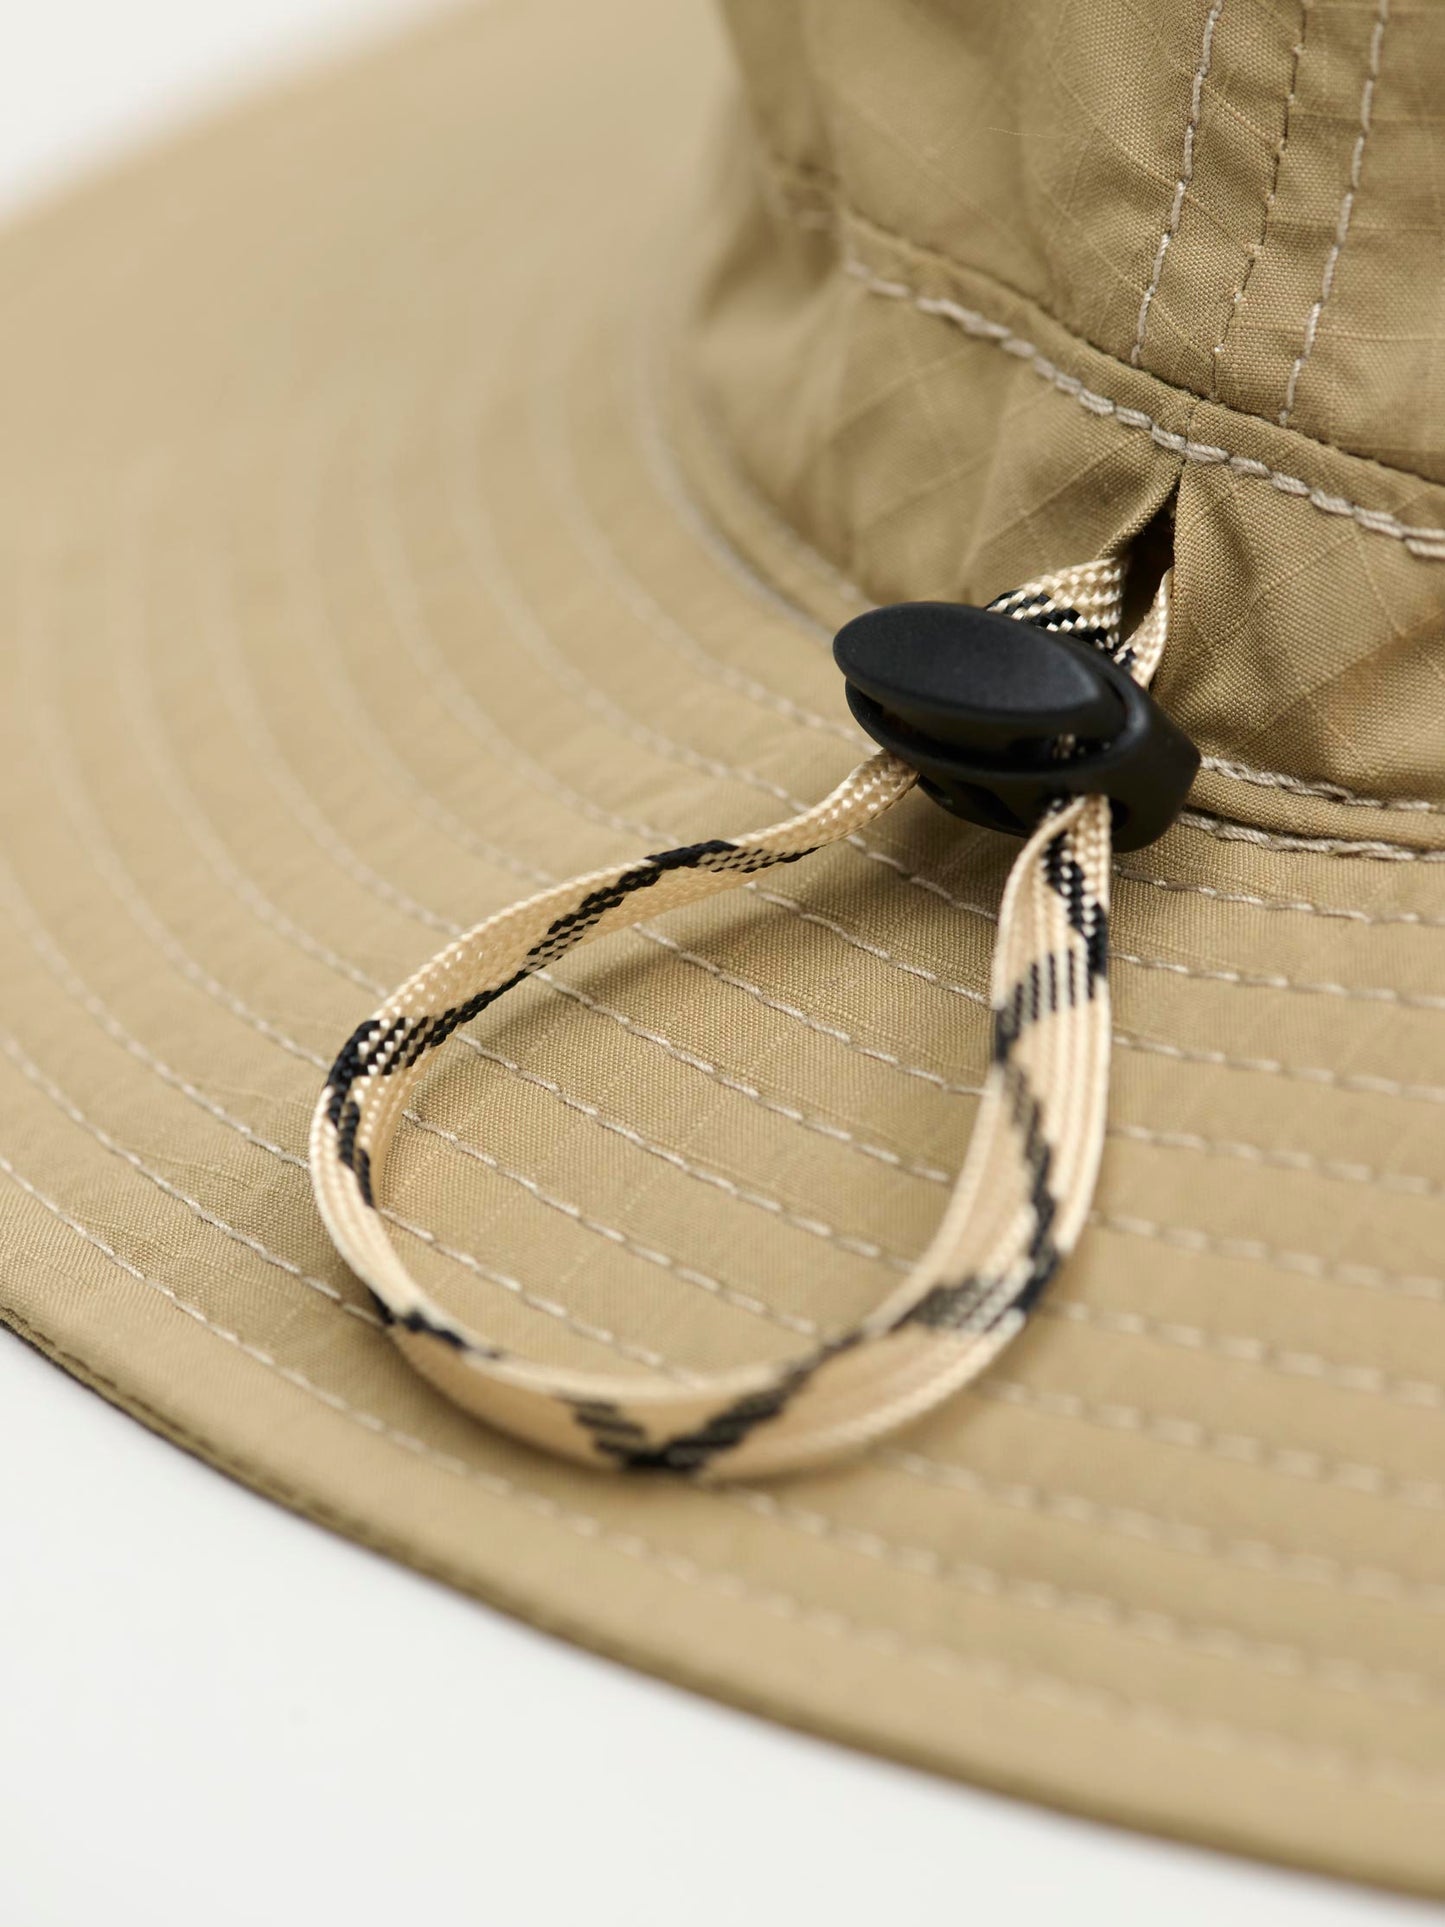 Cotton & Cordura Rip-Stop Drawcord Hat, Beige